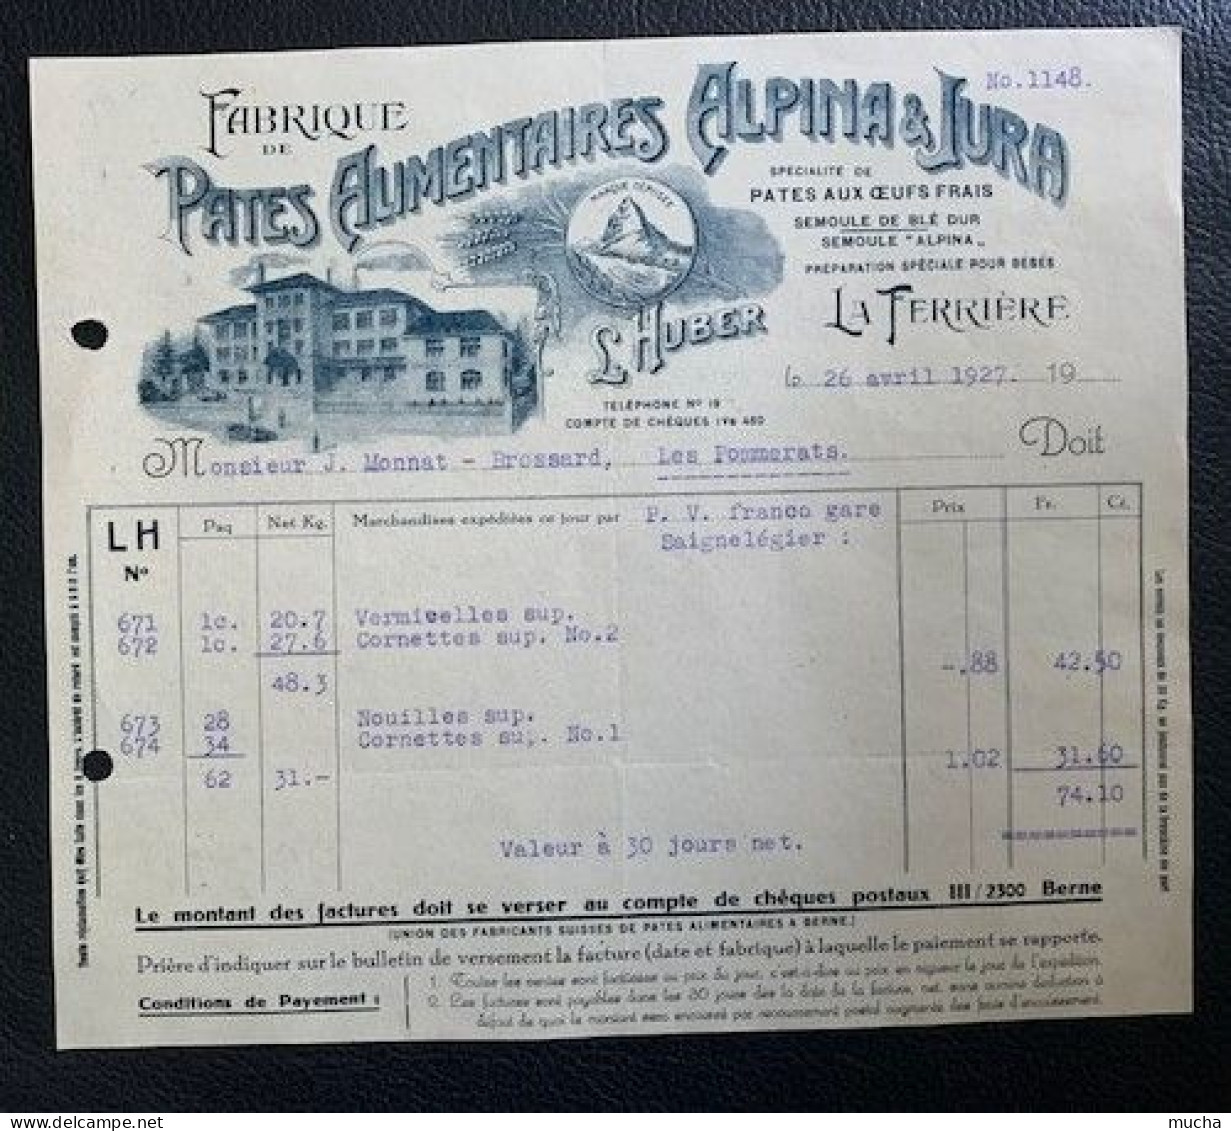 70148 - Facture Illustrée Pates Alimentaires Alpina & Jura La Ferrière 26.04.1922 - Svizzera